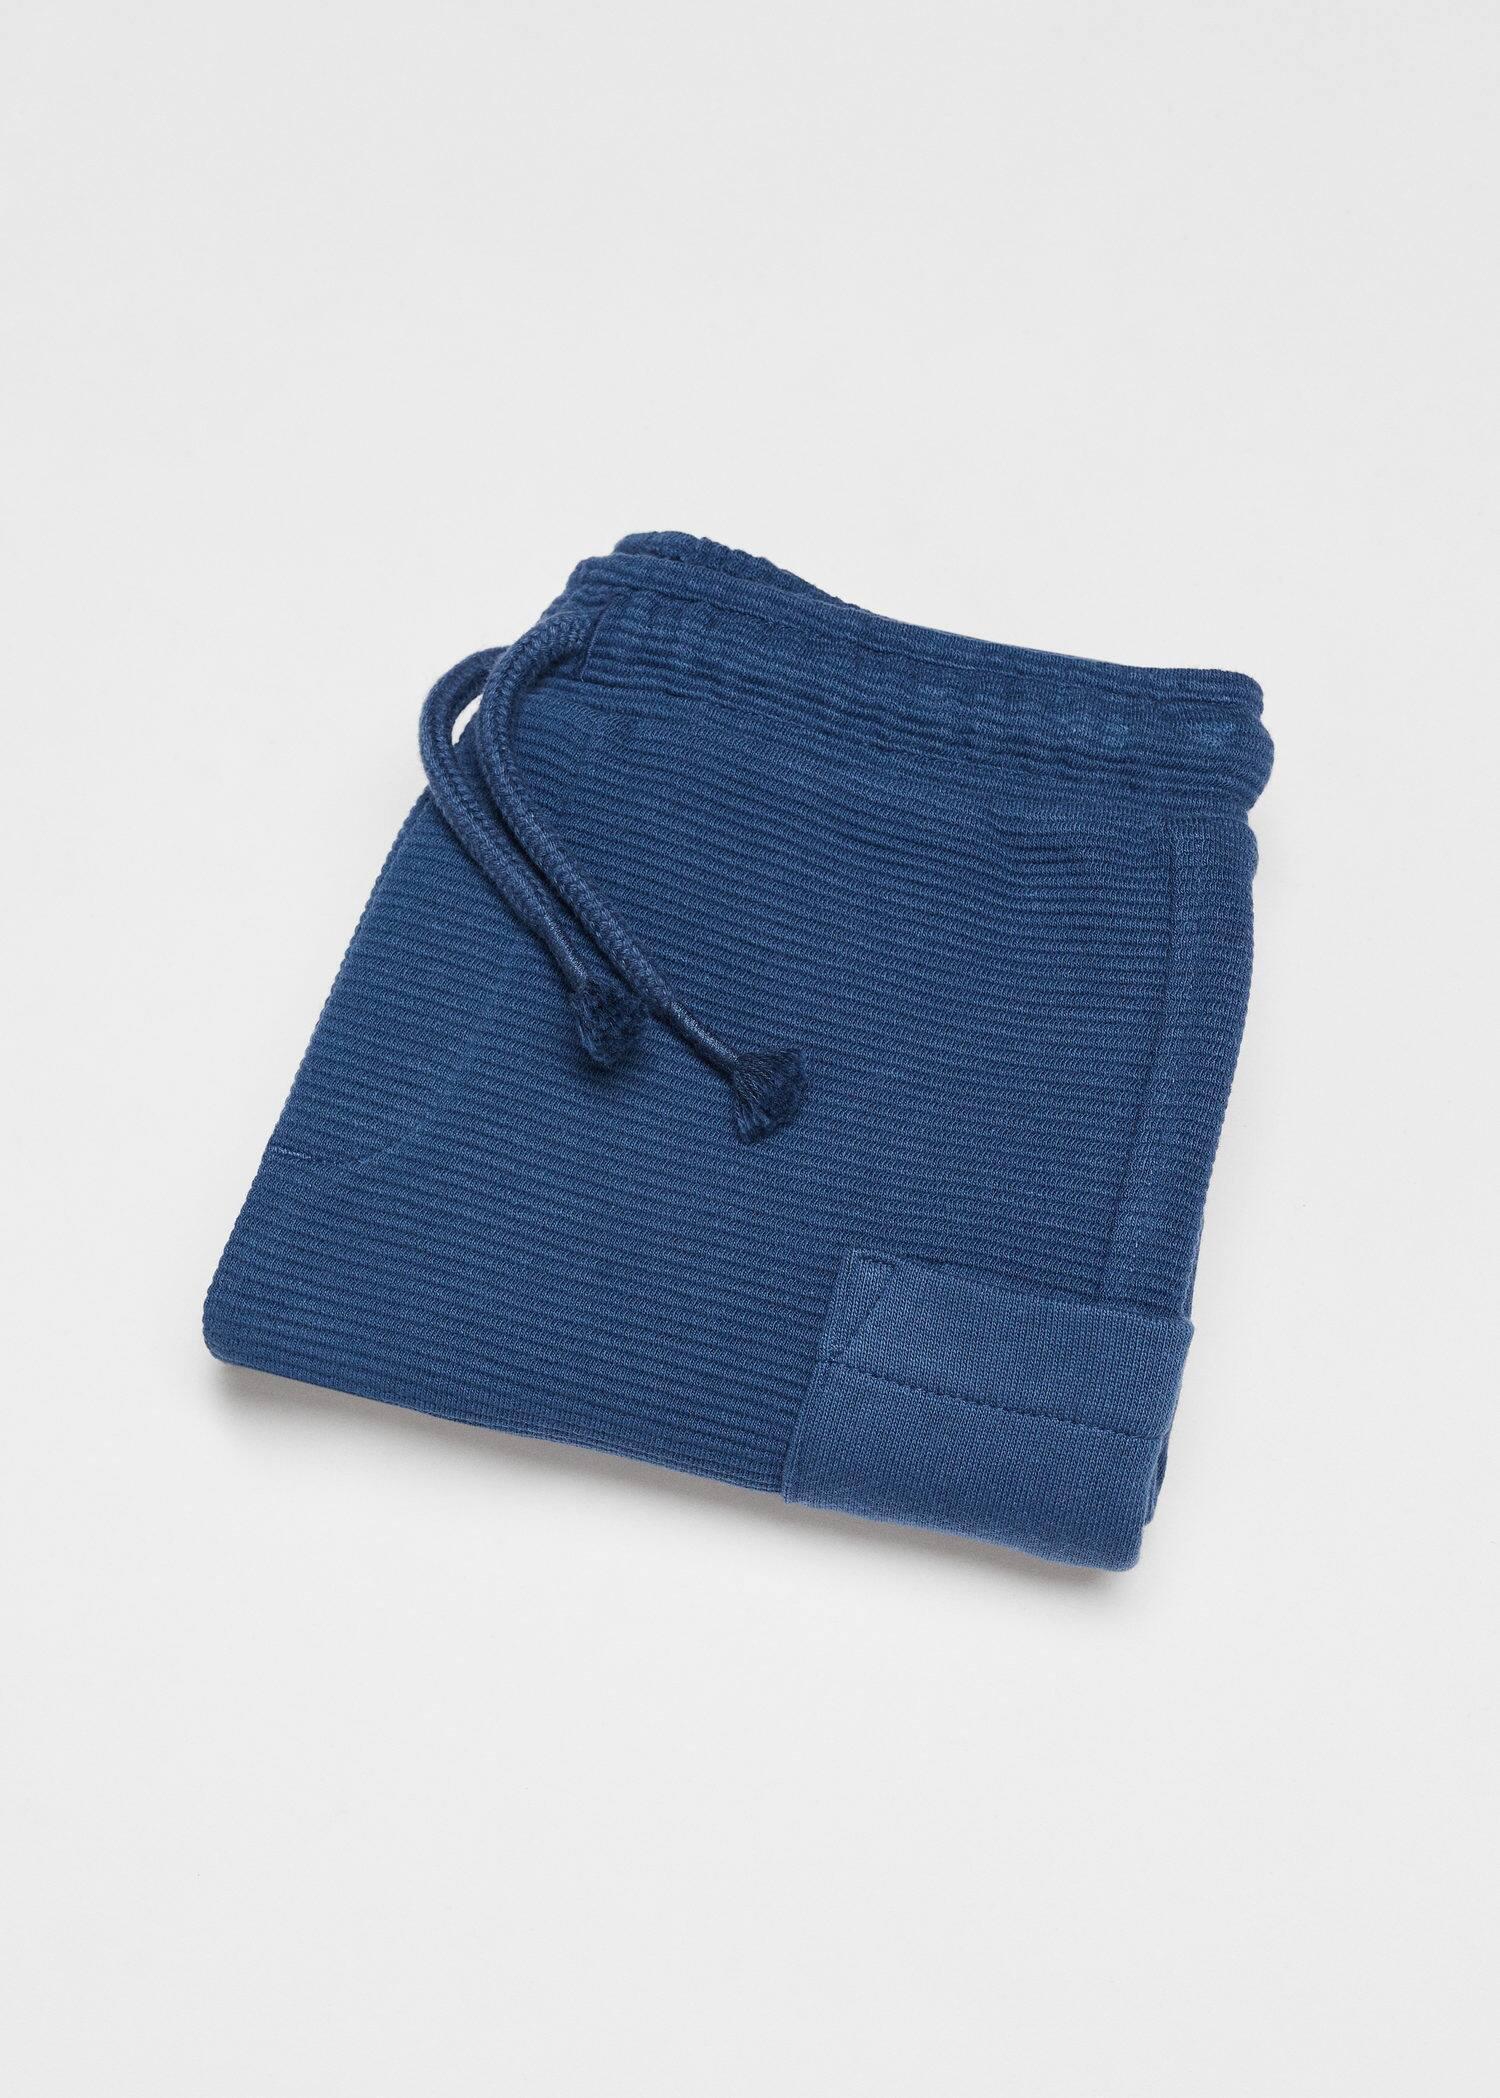 Mango - Navy Textured Cotton-Blend Bermuda Shorts, Kids Boys